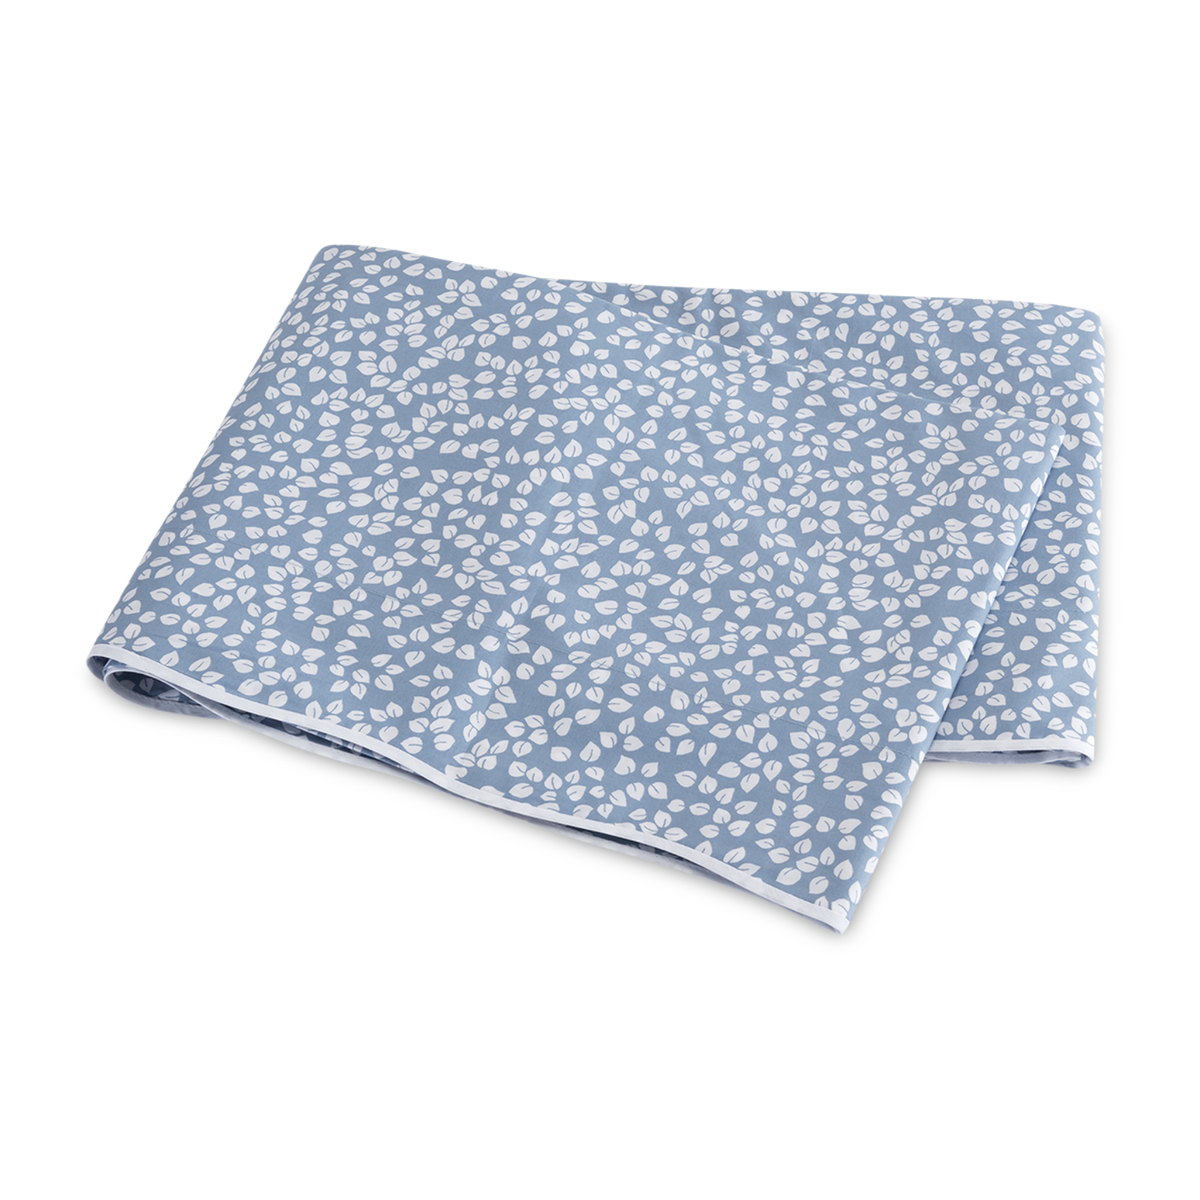 Folded Flat Sheet of Matouk Margot Bedding in Hazy Blue Reverse Color